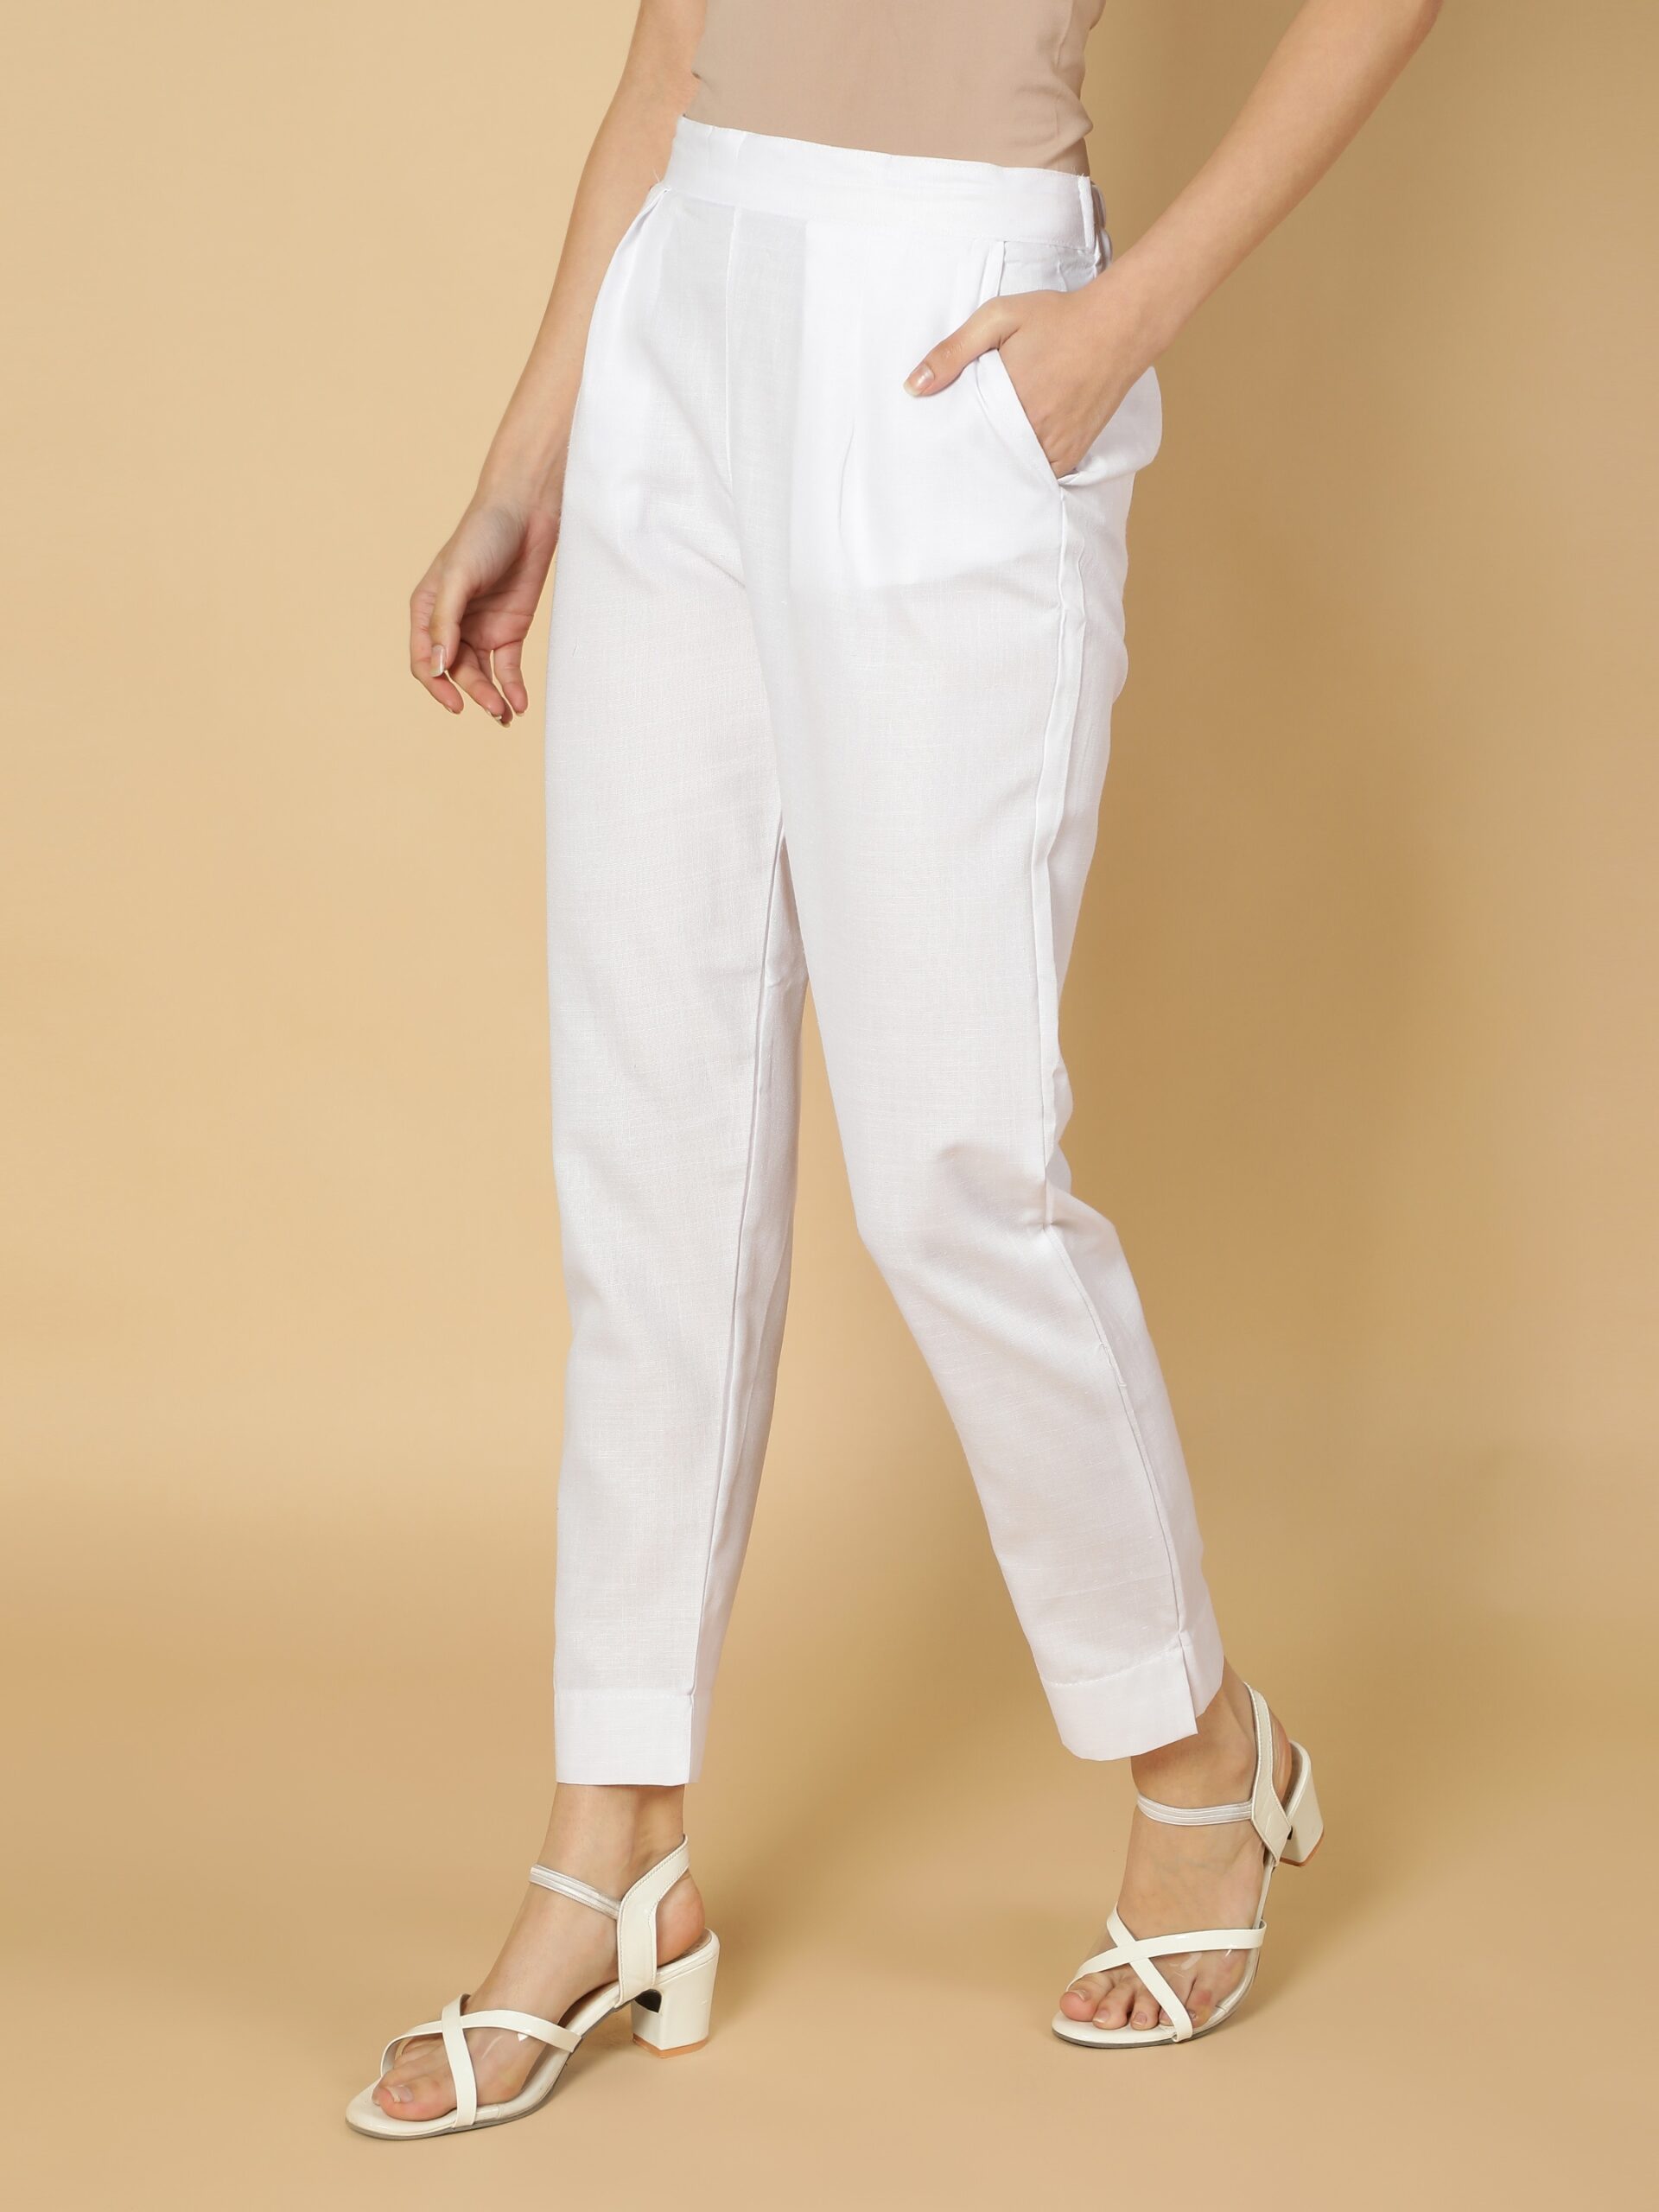 Buy White Trousers Pants For Women online | Lazada.com.ph-saigonsouth.com.vn